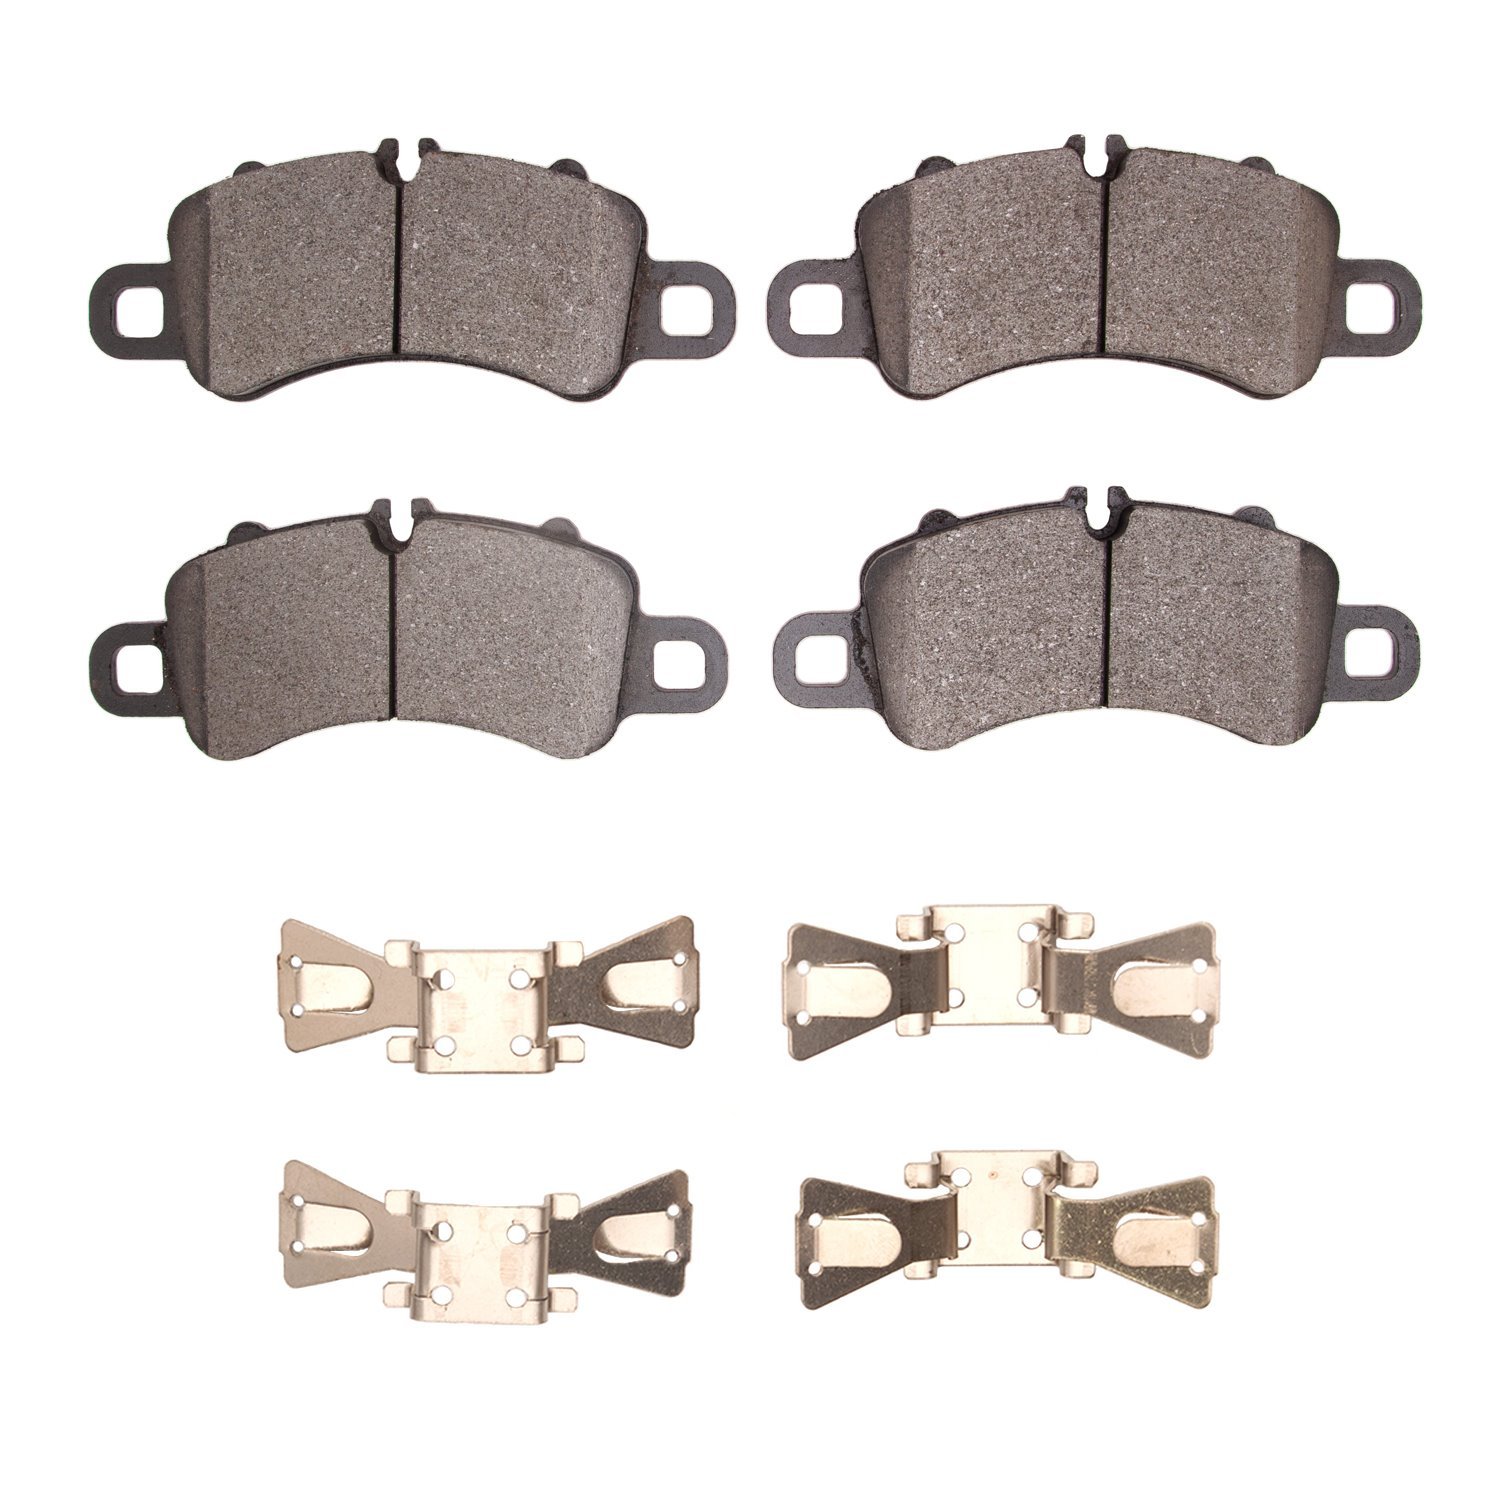 1551-1905-01 5000 Advanced Low-Metallic Brake Pads & Hardware Kit, Fits Select Porsche, Position: Front